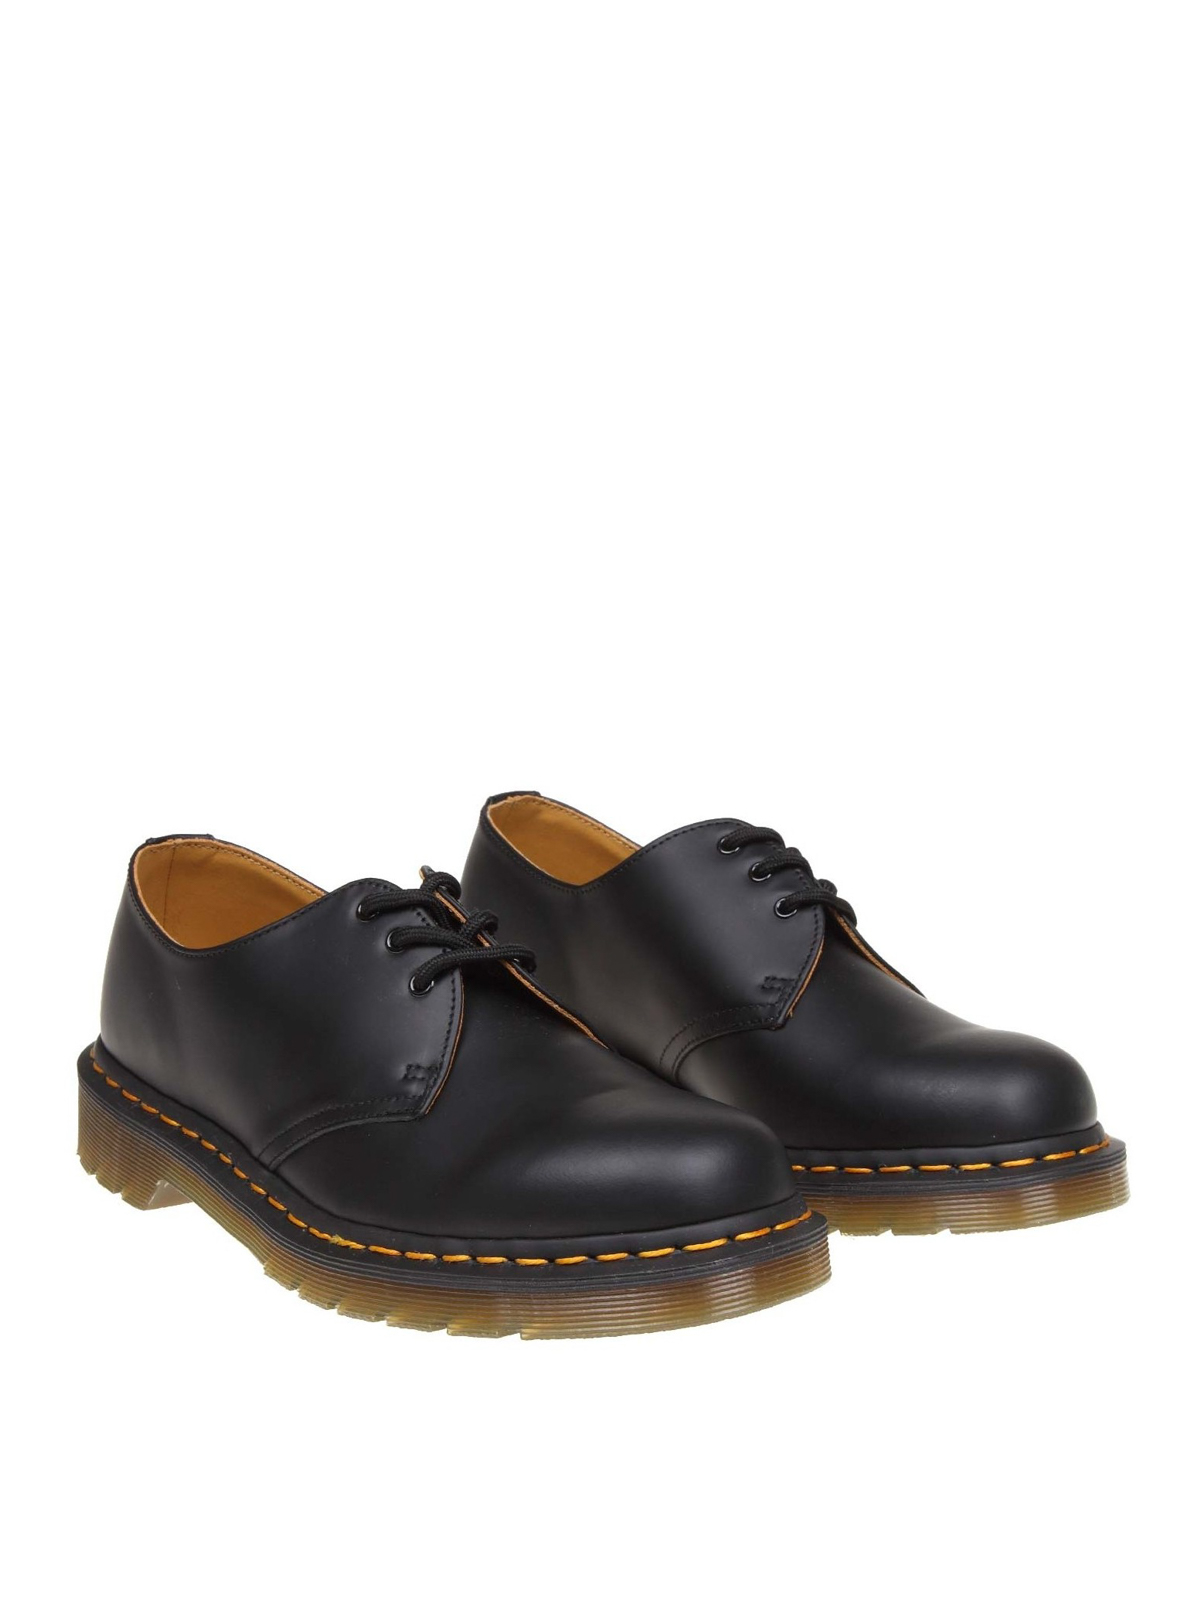 wenkbrauw Tapijt Konijn Lace-ups shoes Dr. Martens - 1461 leather Derby shoes - DMS1461BSMZ10085001